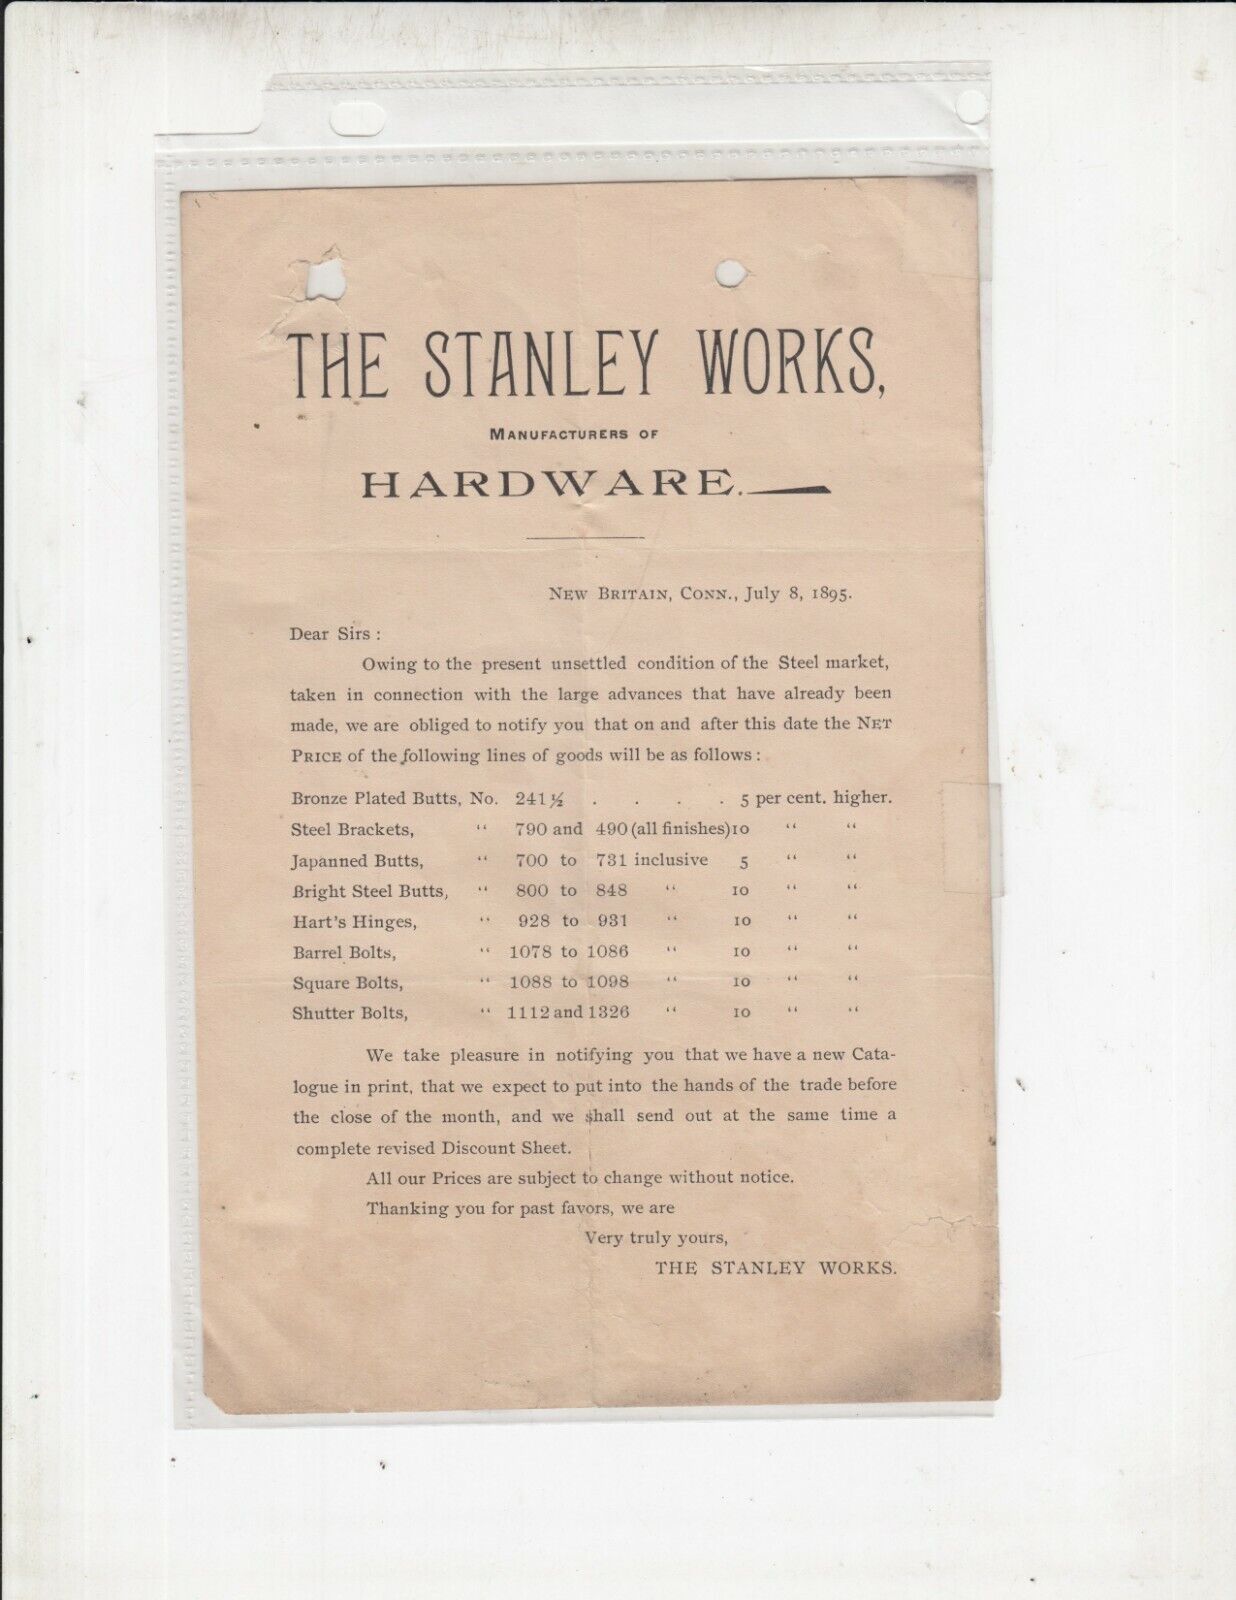 Super VINTAGE STANLEY SW Hardware, 1895 The STANLEY WORKS Price Increase Letter